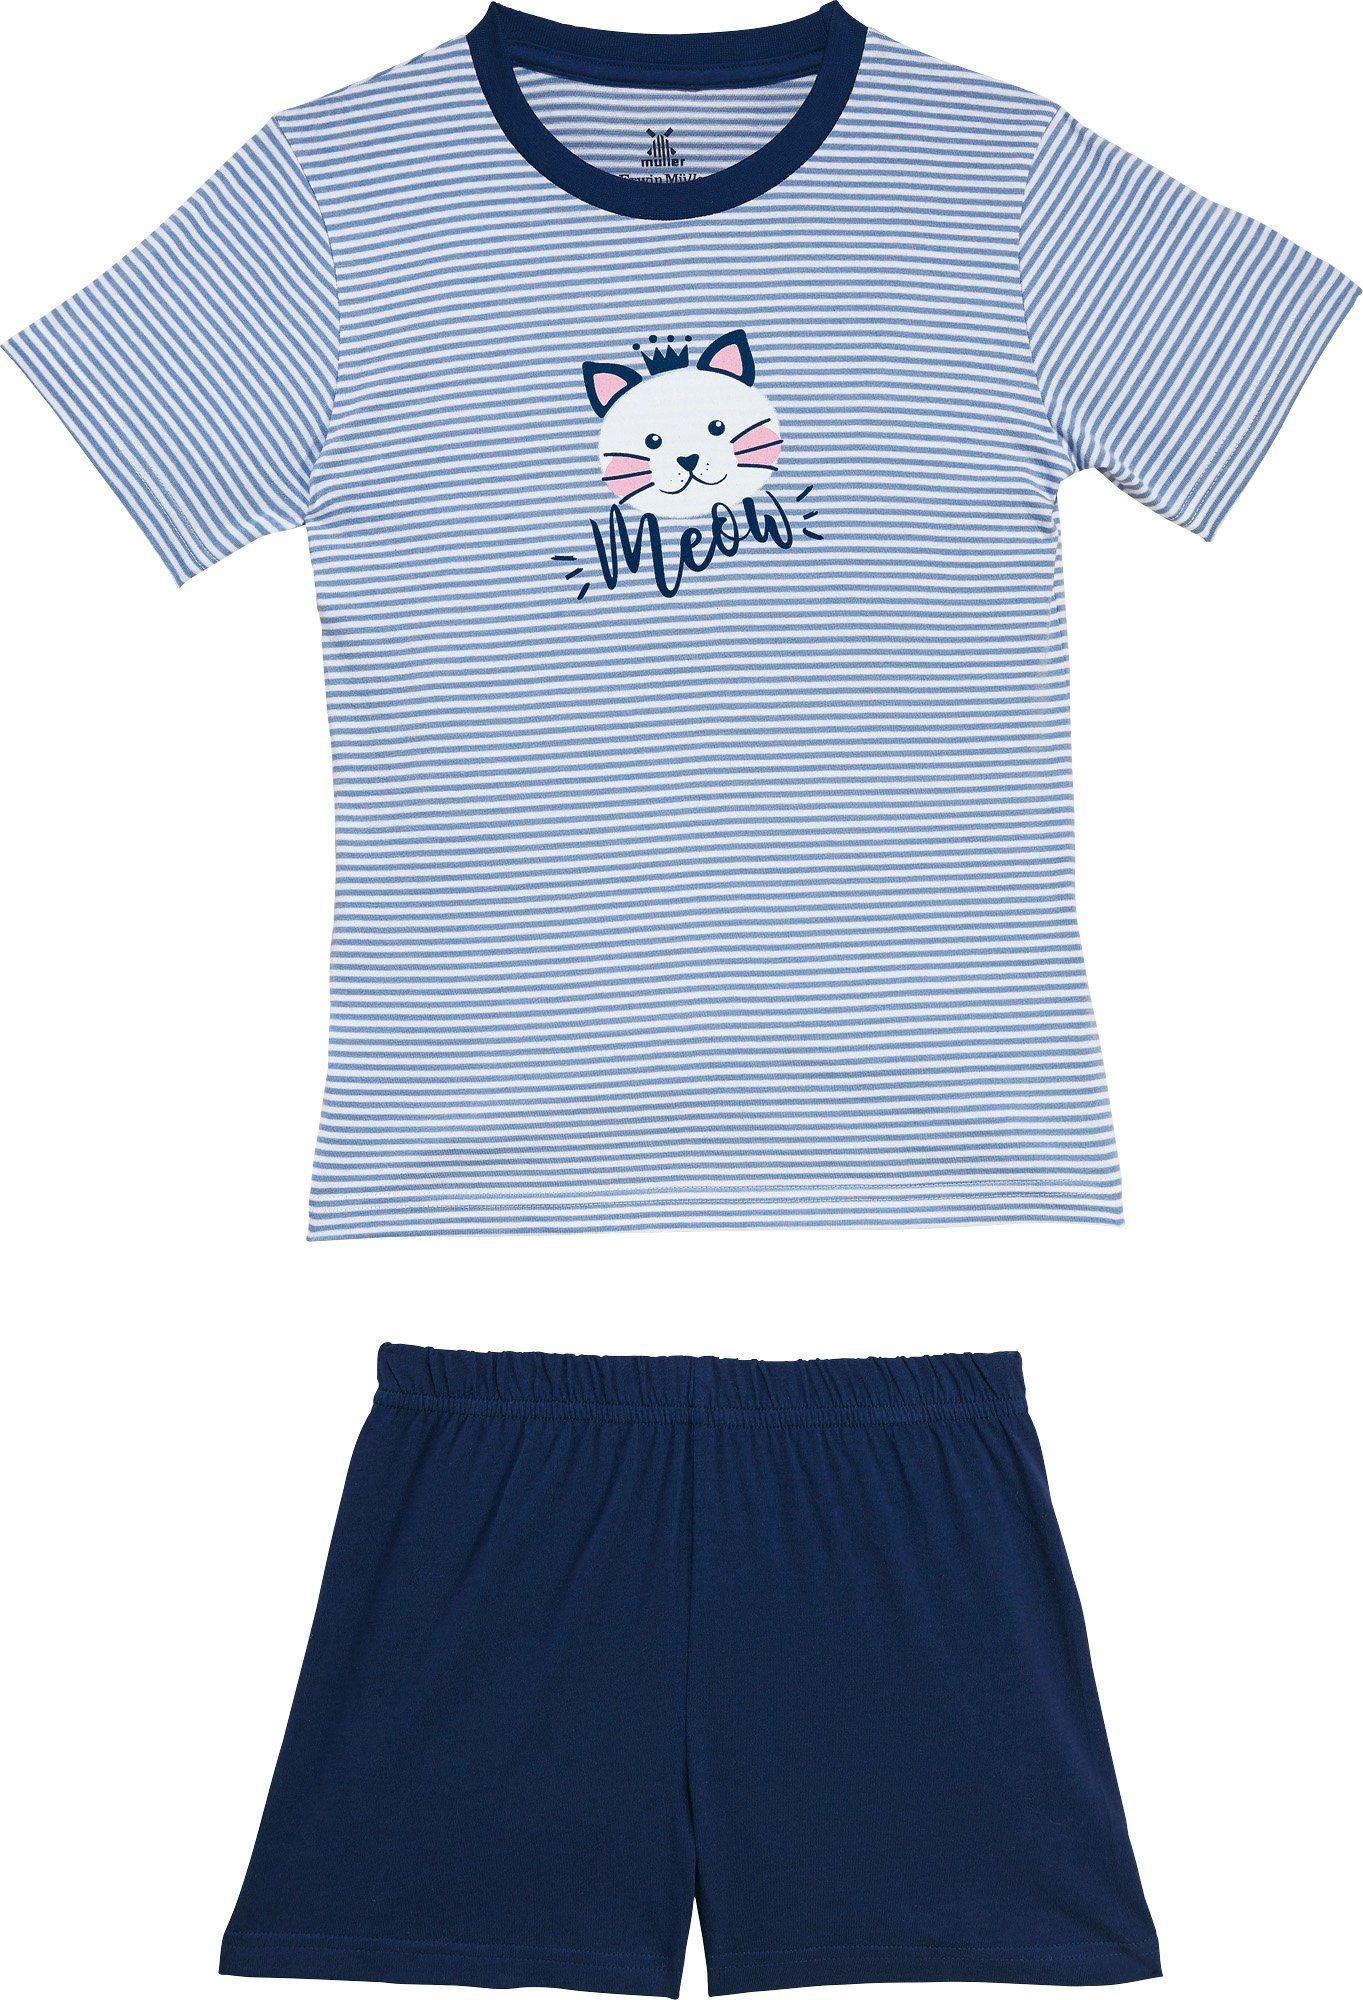 Kinder Kinderunterwäsche Erwin Müller Pyjama Kinder-Shorty Single-Jersey Streifen